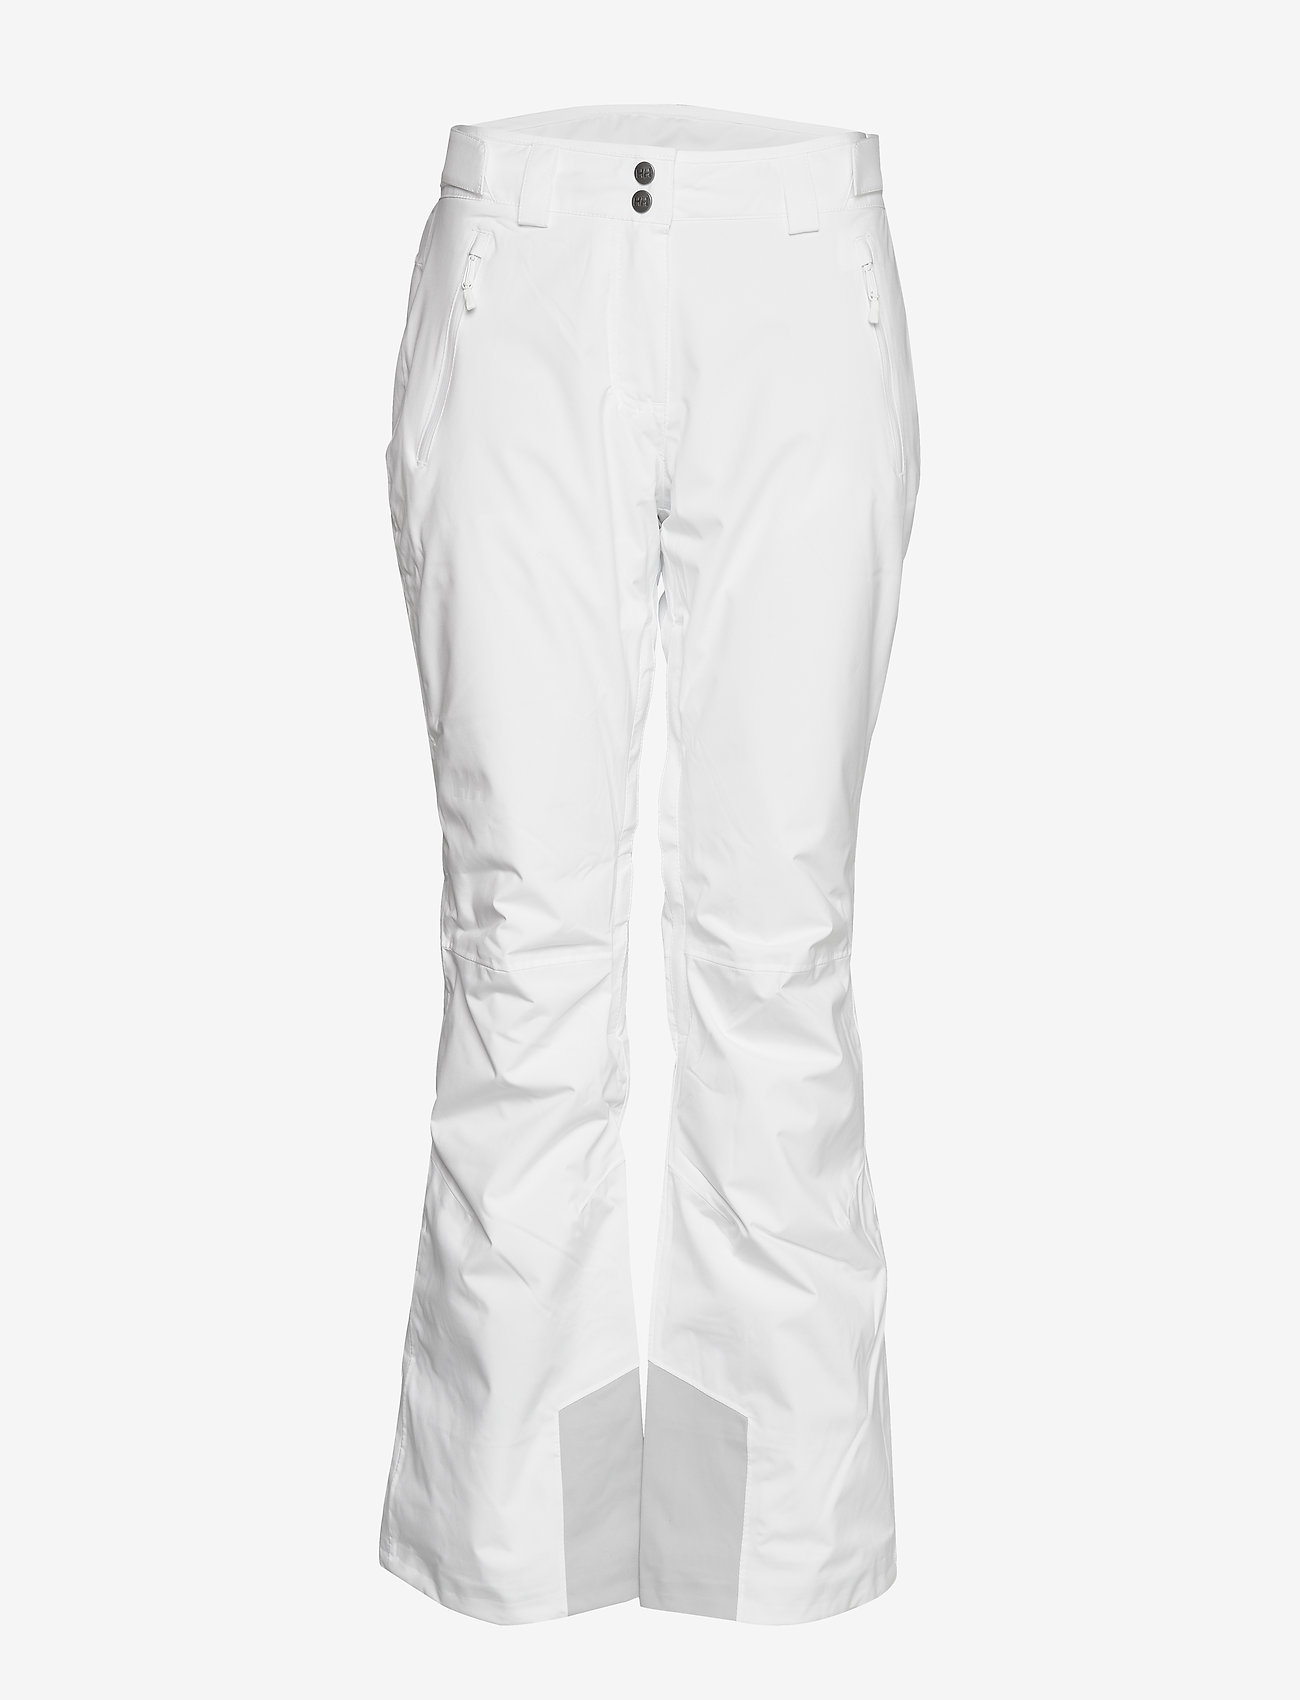 Helly Hansen - W LEGENDARY INSULATED PANT - spodnie narciarskie - white - 1